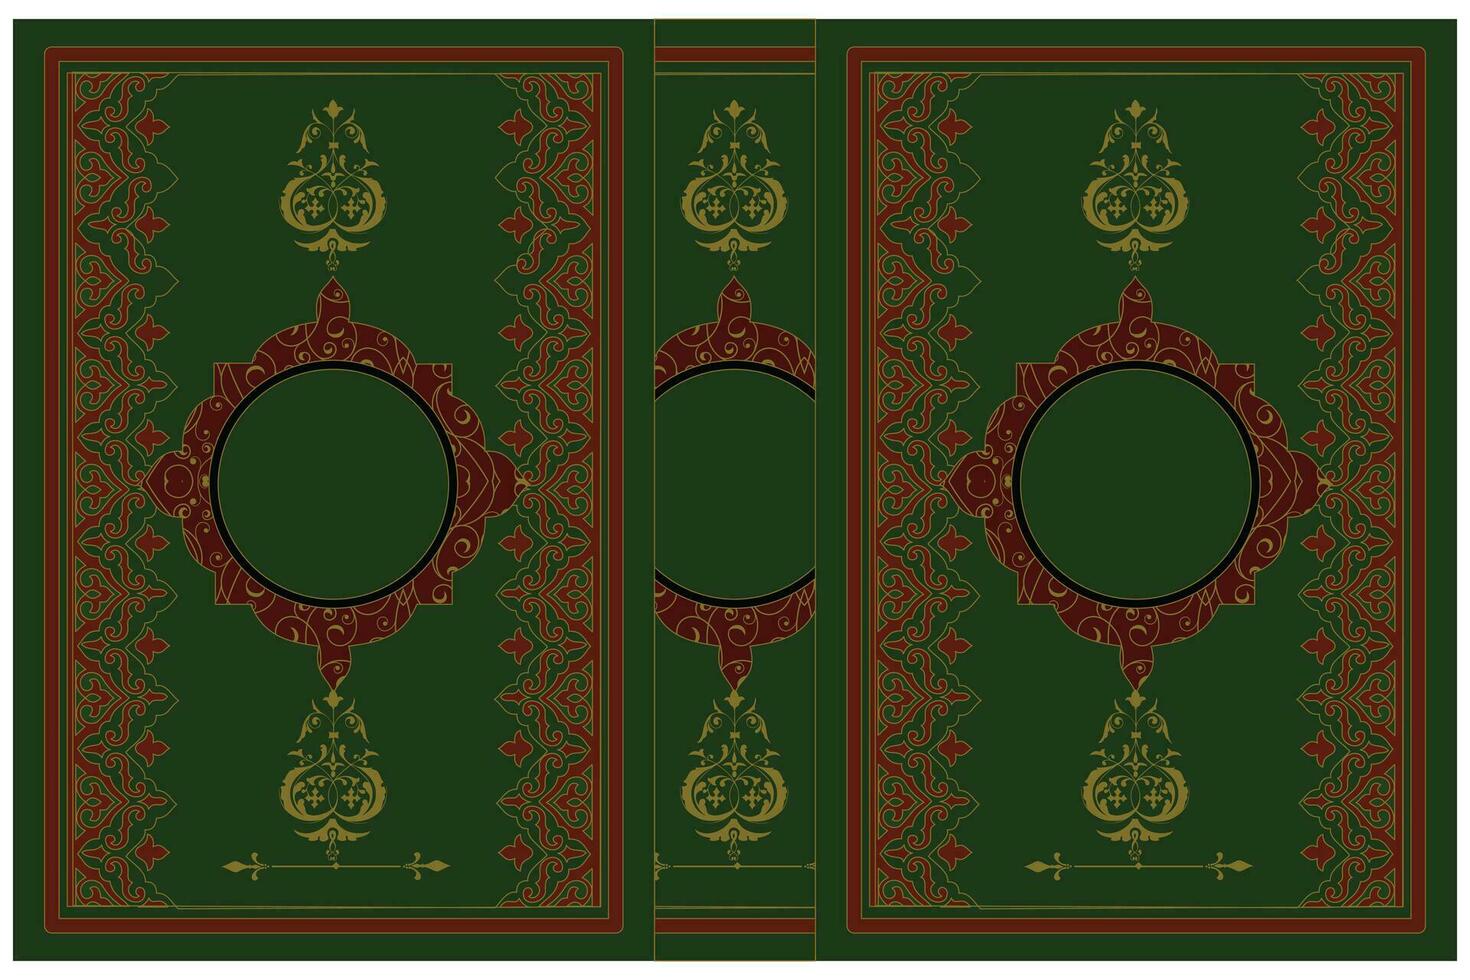 Quran Book Cover Design with Arabic Border frame vector